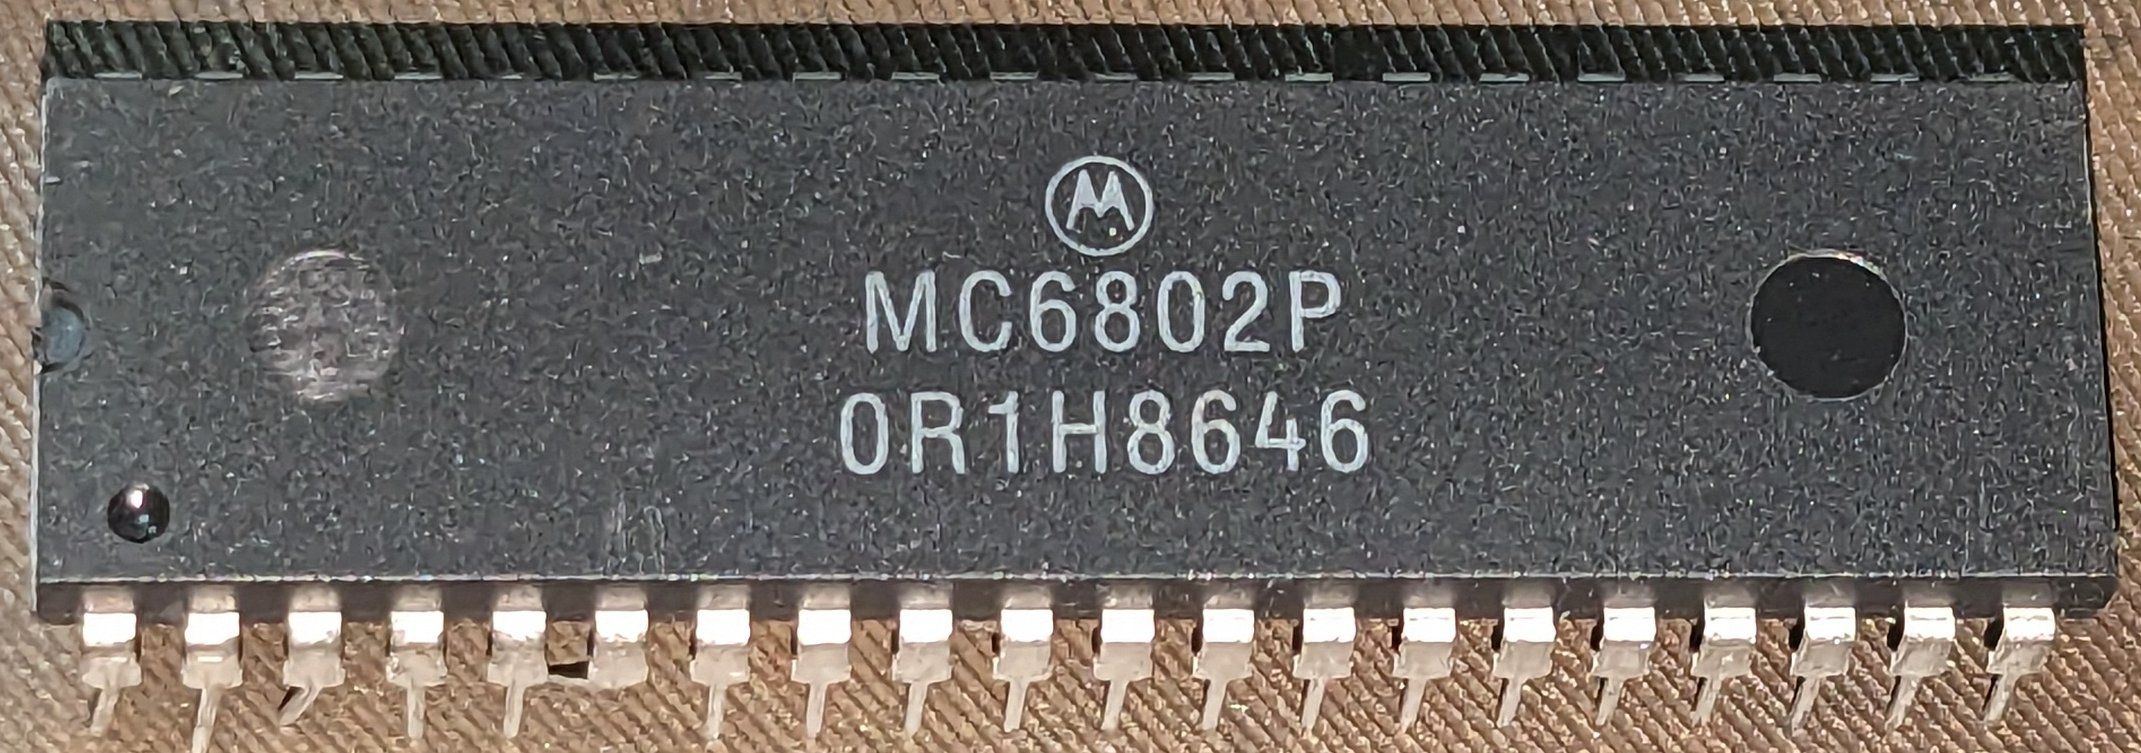 mcmaster:motorola:mc6802p:pack_top.jpg